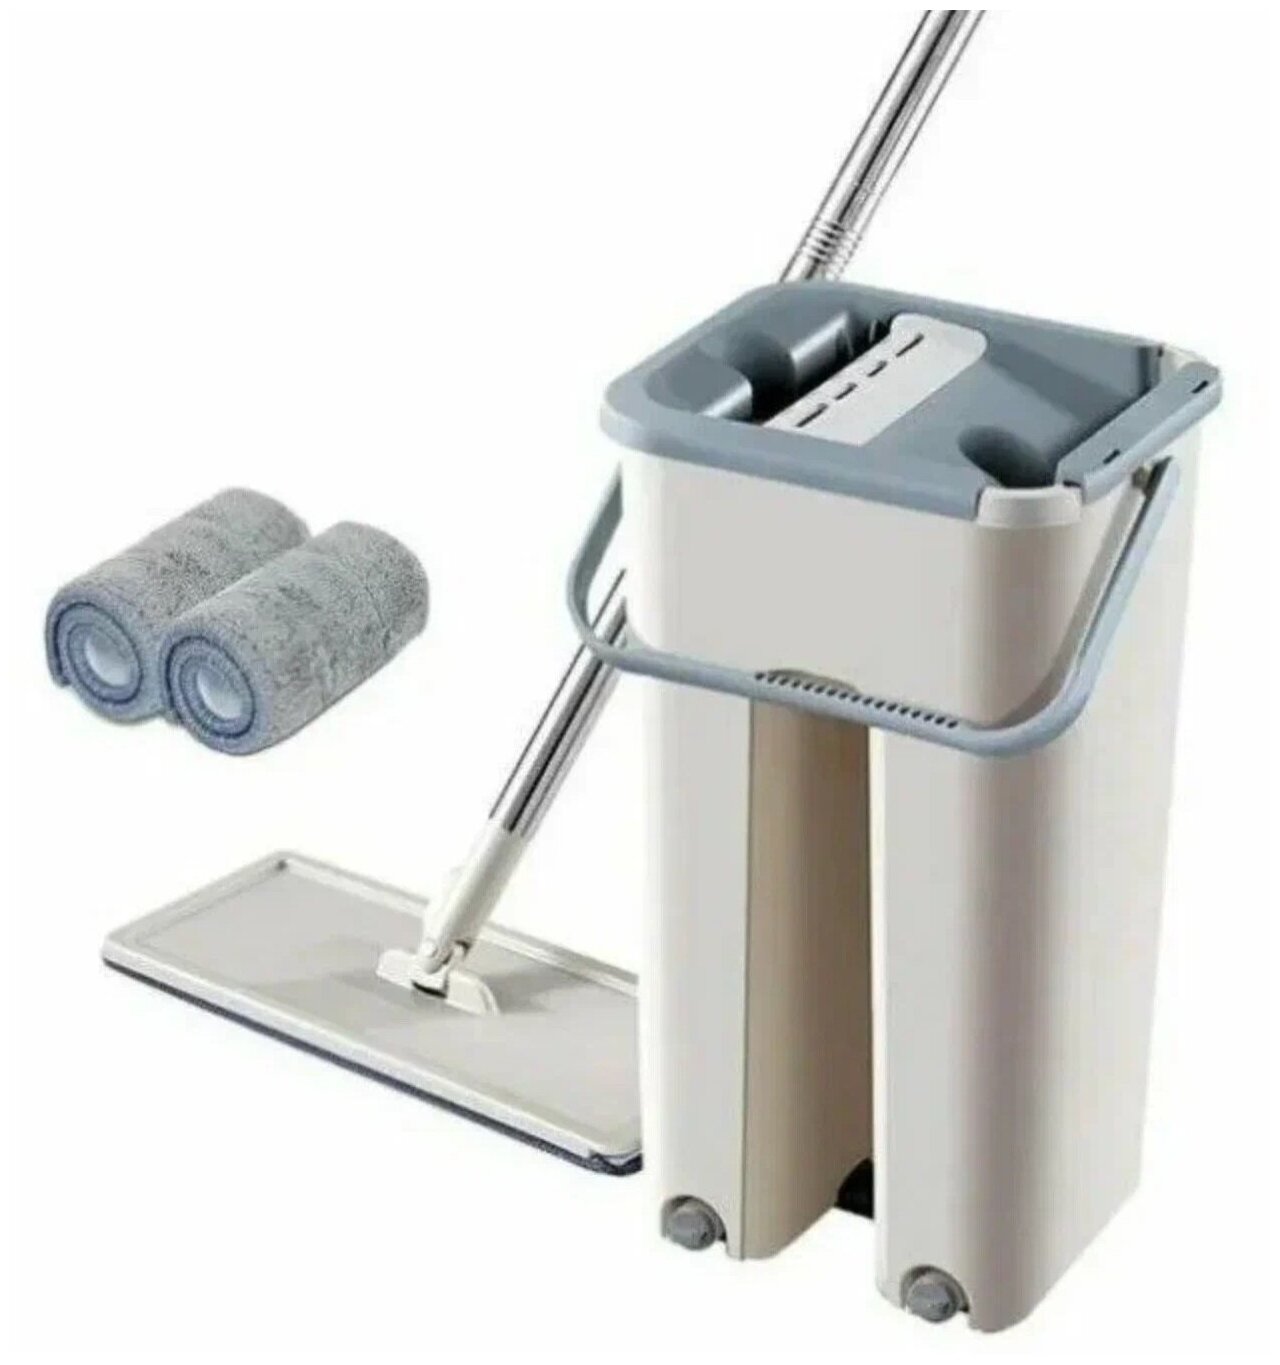 Scratch Cleaning Mop Комплект для уборки швабра и ведро с отжимом бежевый